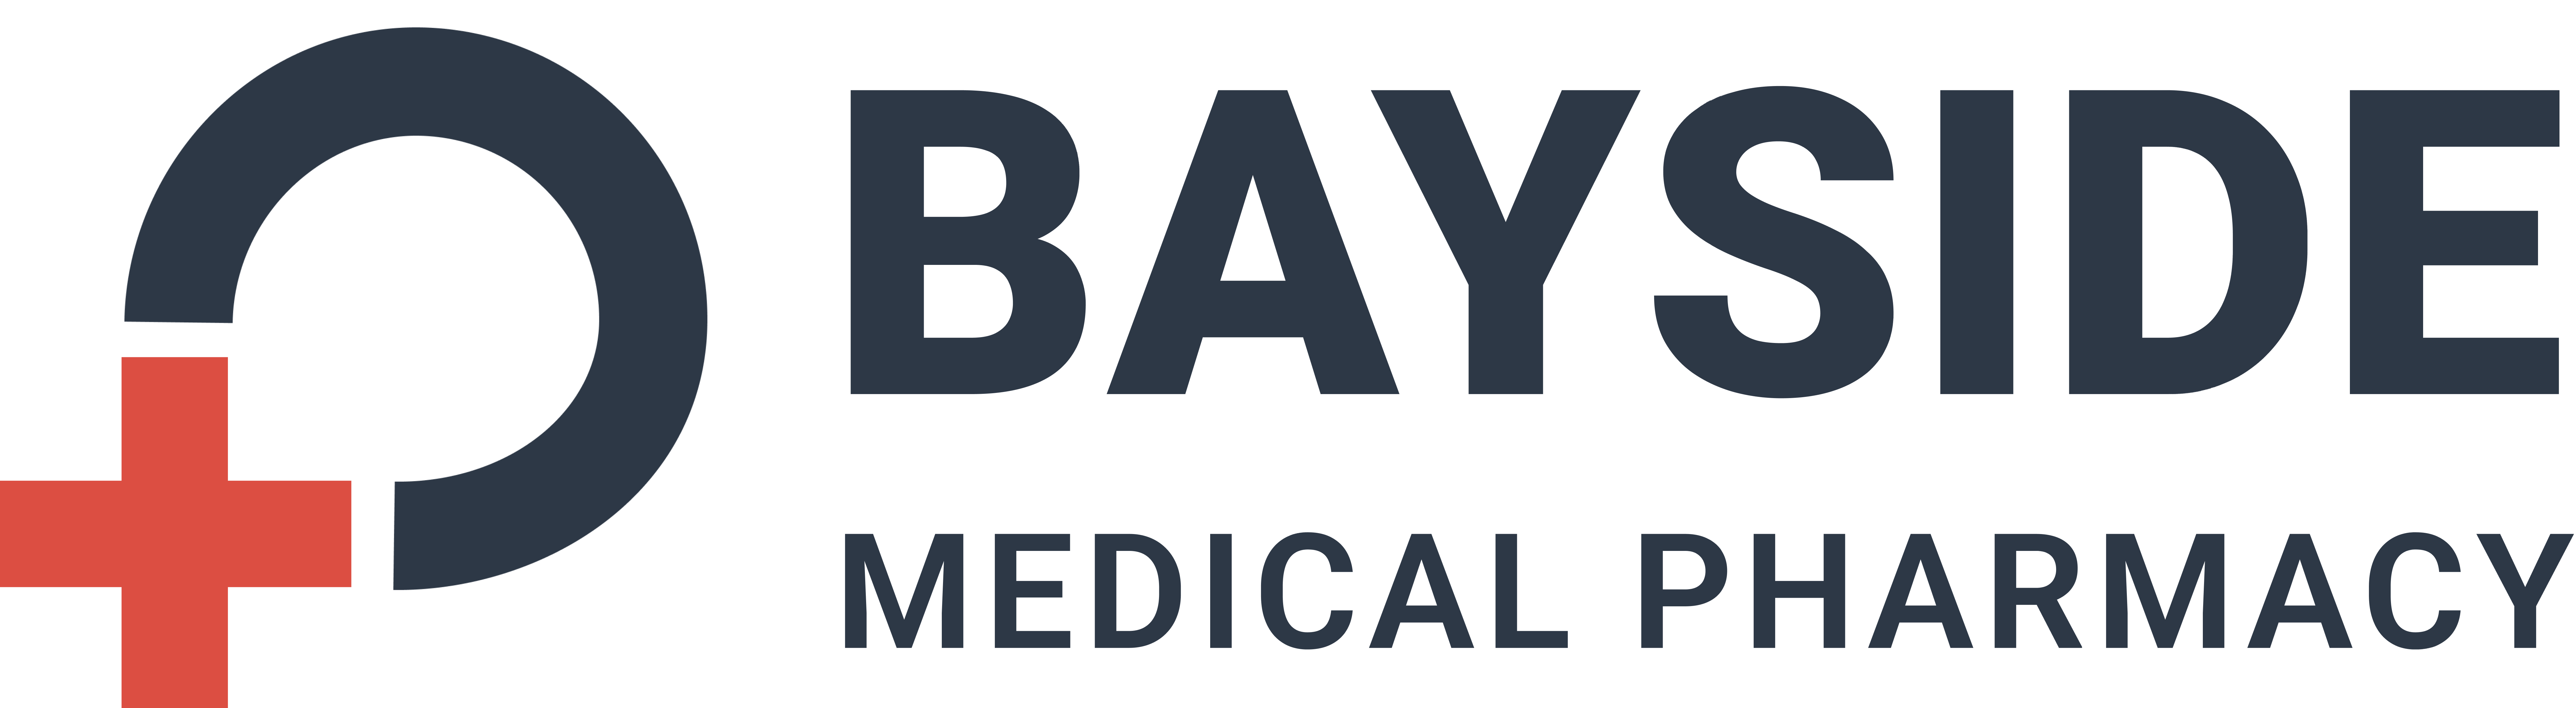 Bayside Medical Pharmacy Group